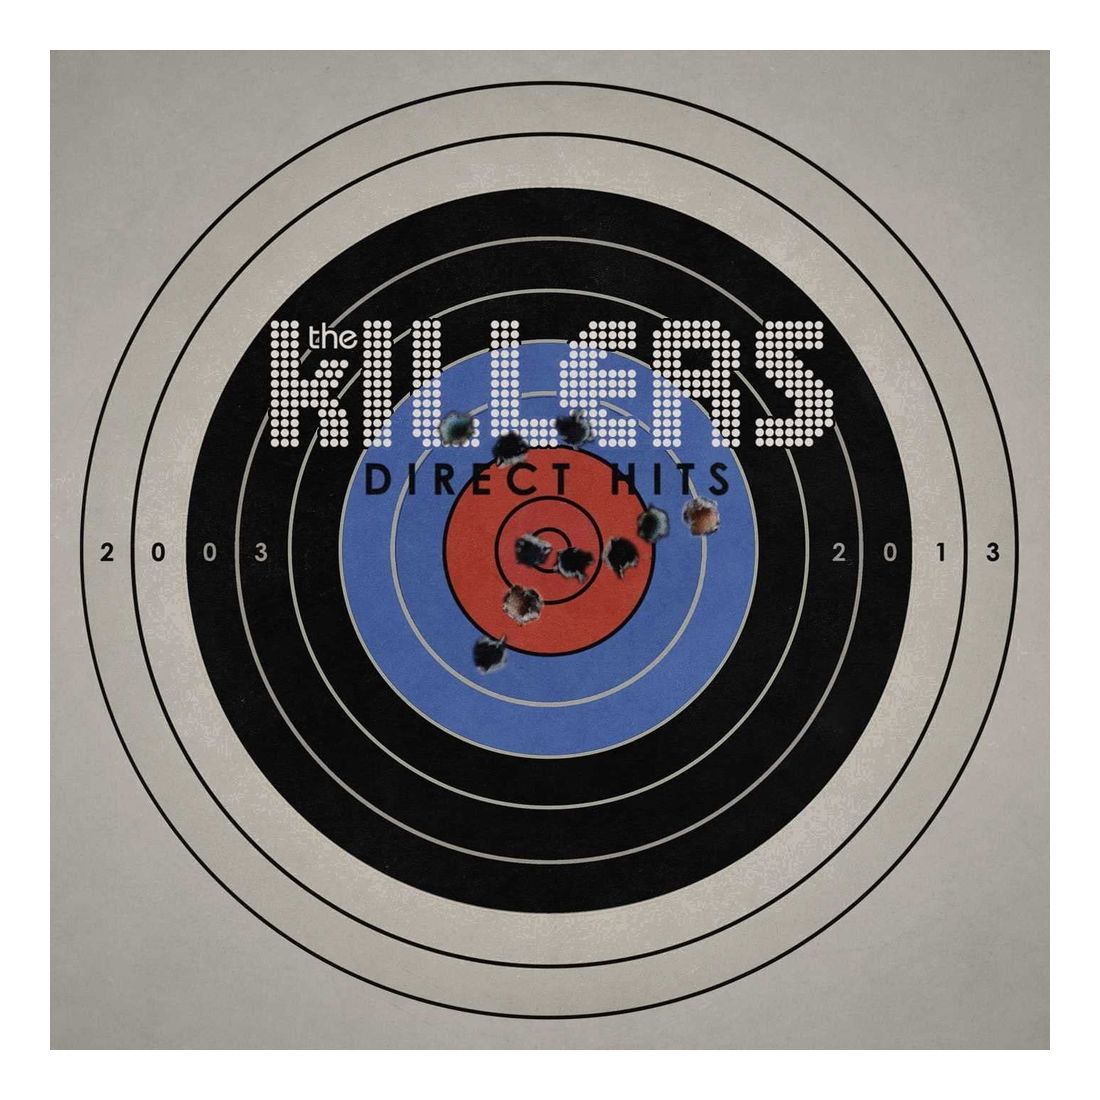 Killers обложка. Прозрачная виниловая пластинка. The Killers direct Hits. The Killers альбомы. The Killers обложки альбомов.